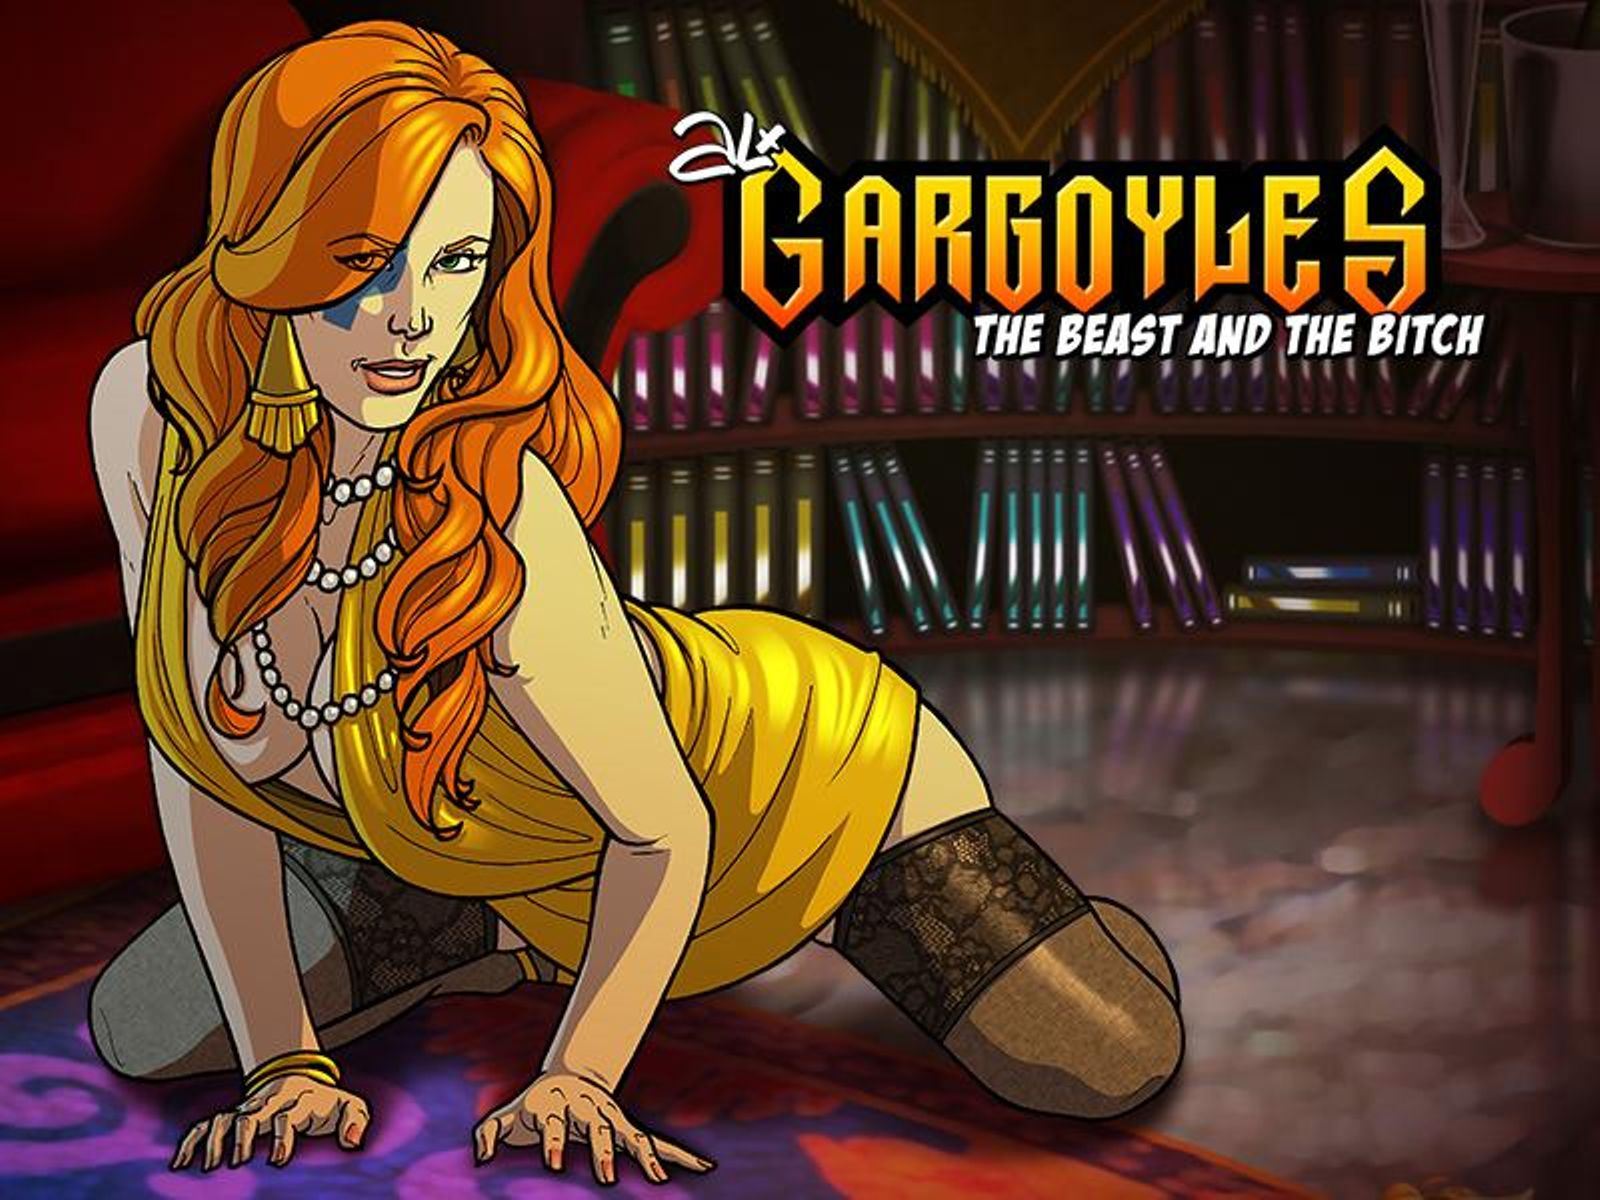 Gargoyle Anal Sex Porn - Ren'py] Gargoyles, The beast and the Bitch - v1.02 by Alx & Khronos 18+  Adult xxx Porn Game Download